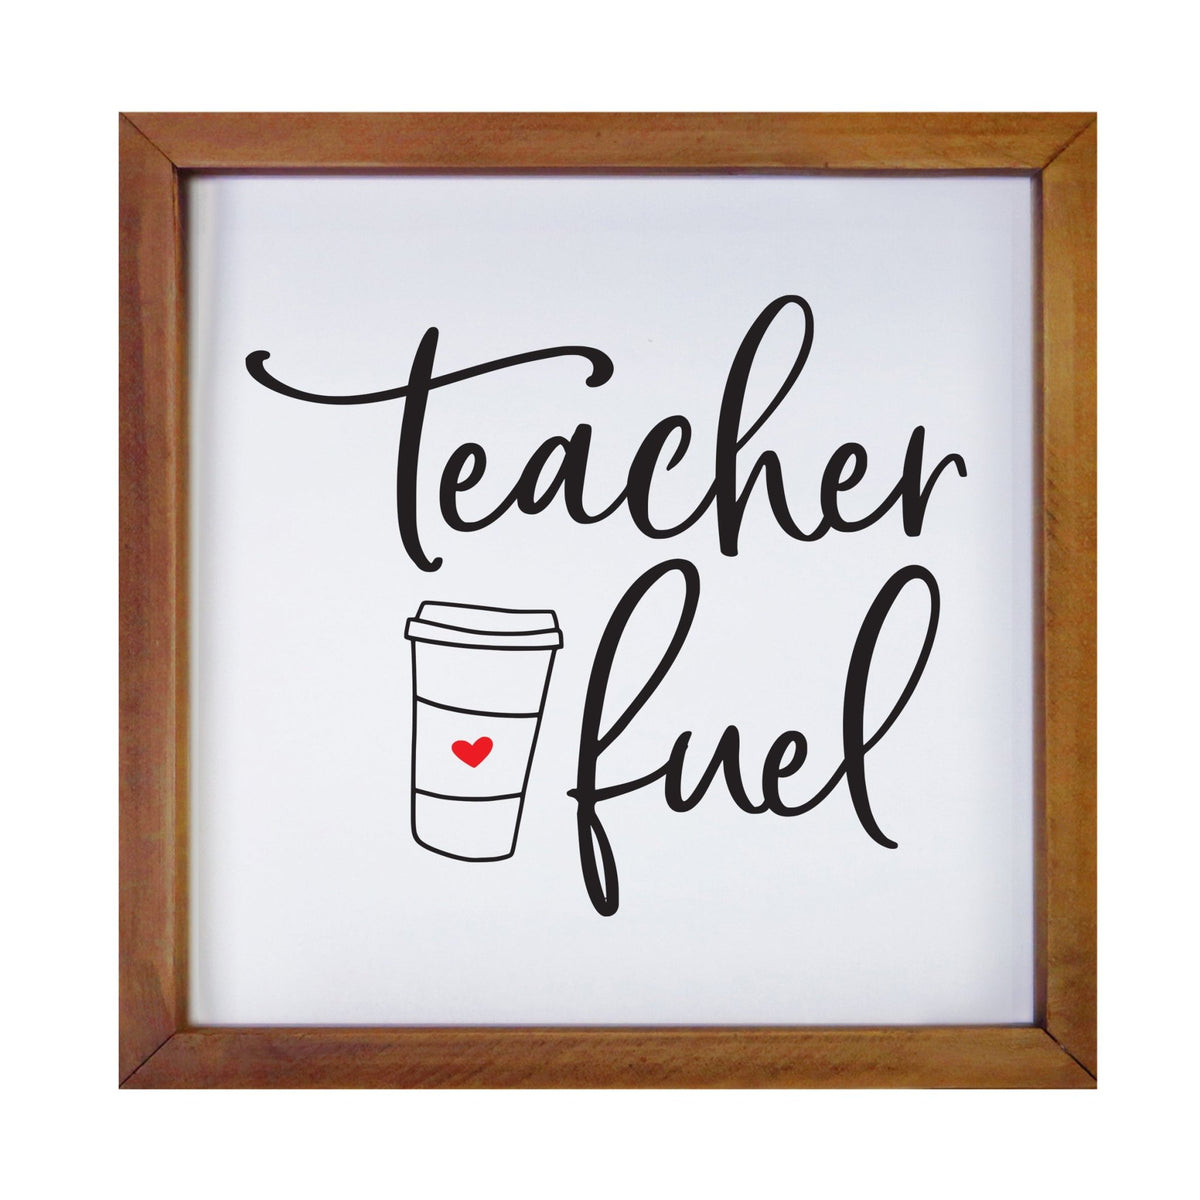 Inspiring Modern Framed Shadow Box 7x7in - Teacher Fuel - LifeSong Milestones